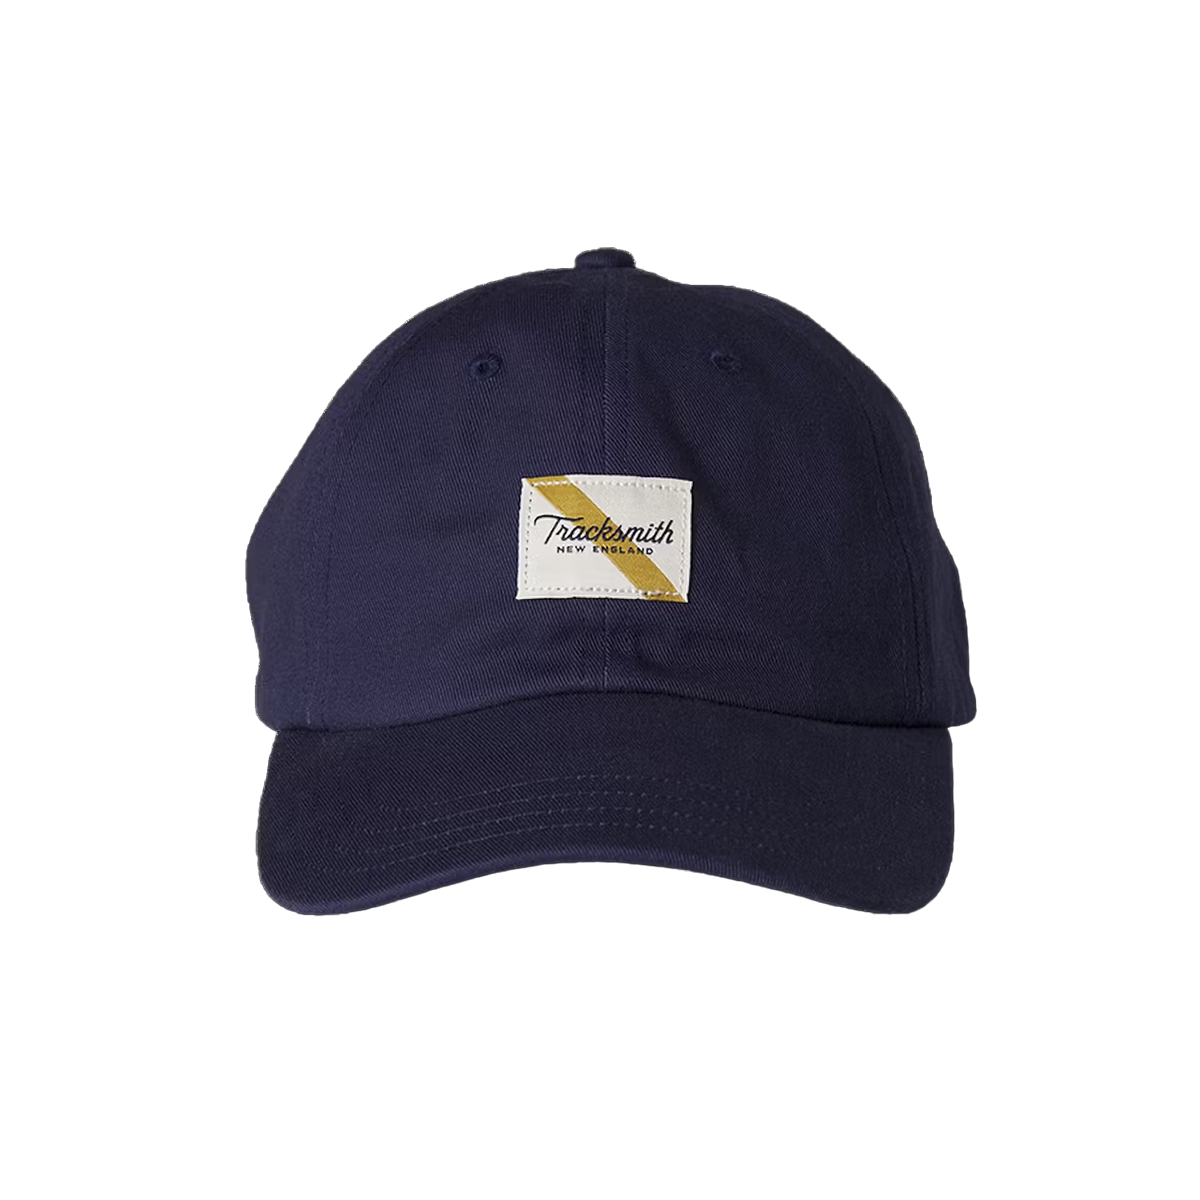 Tracksmith Tracksmith Hat, , large image number null